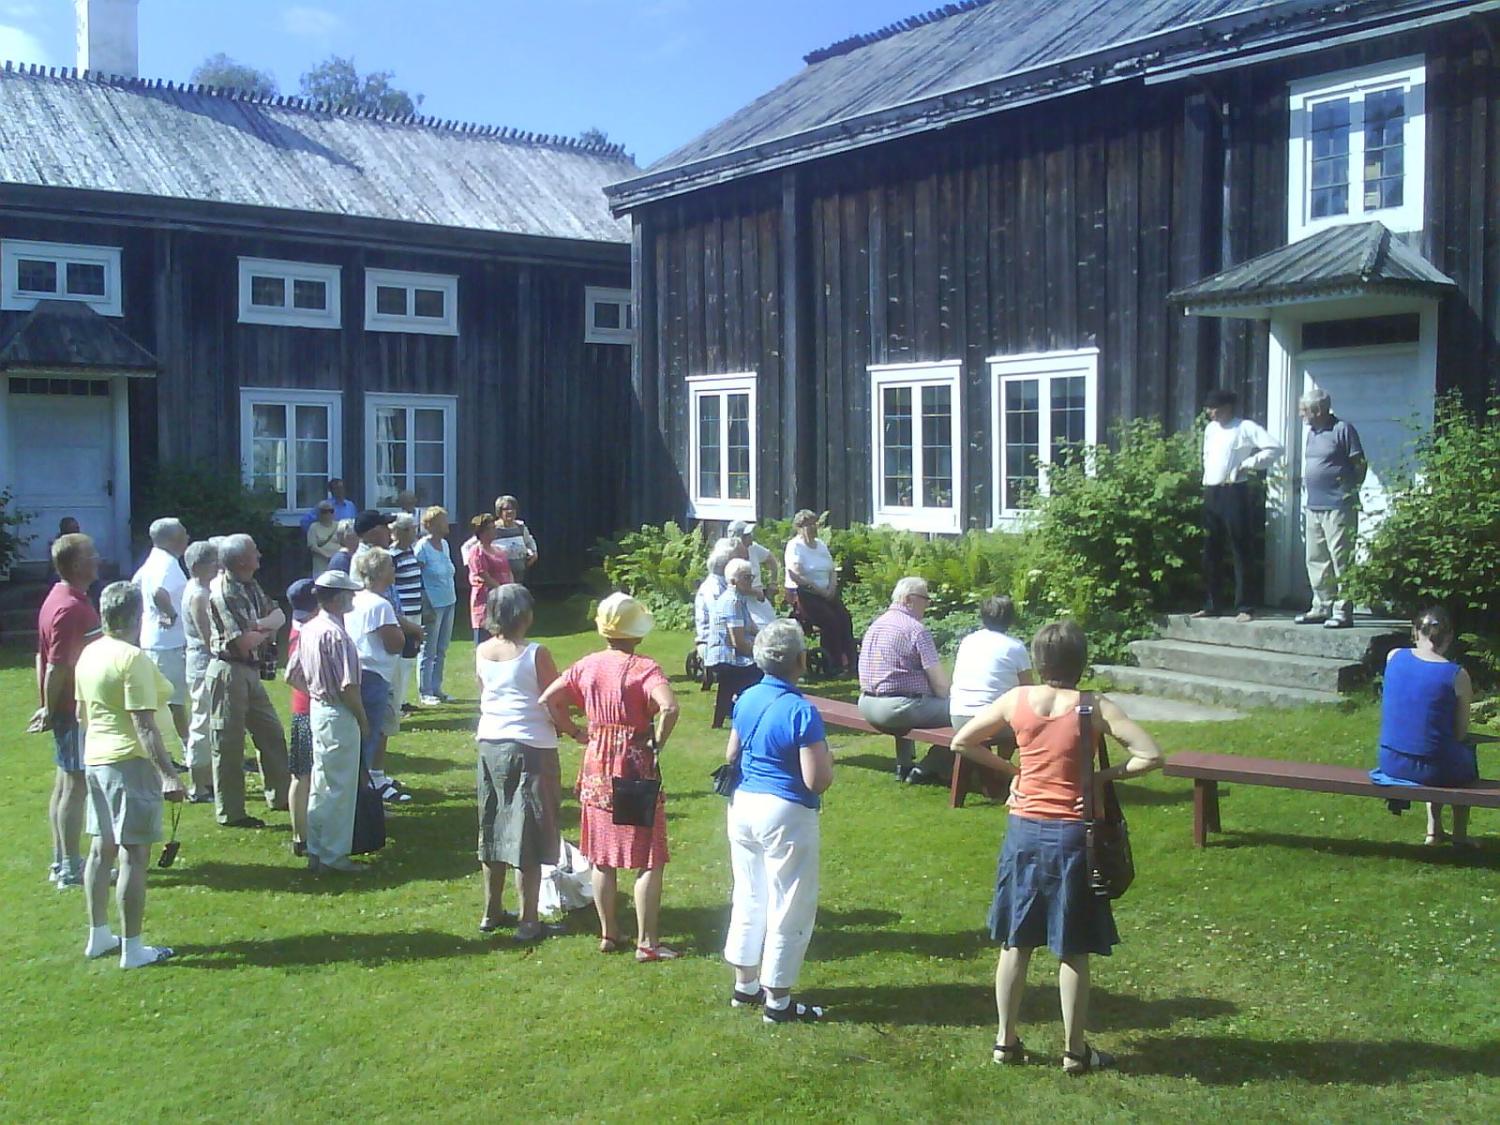 Xperience the world heritage "Farmhouses of Hälsingland"